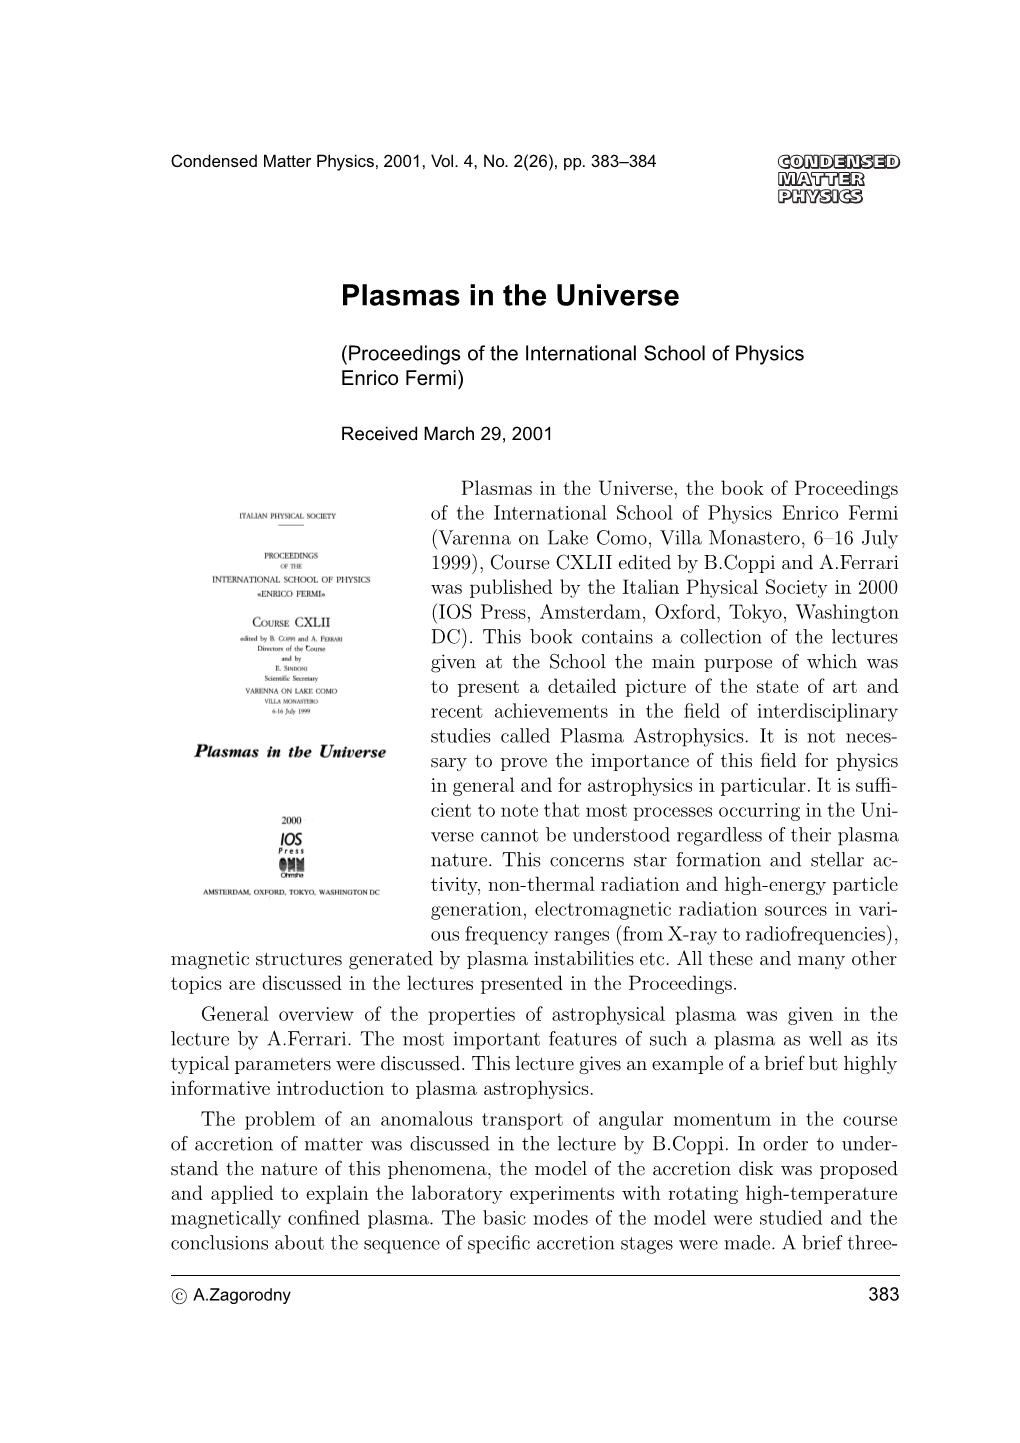 Plasmas in the Universe